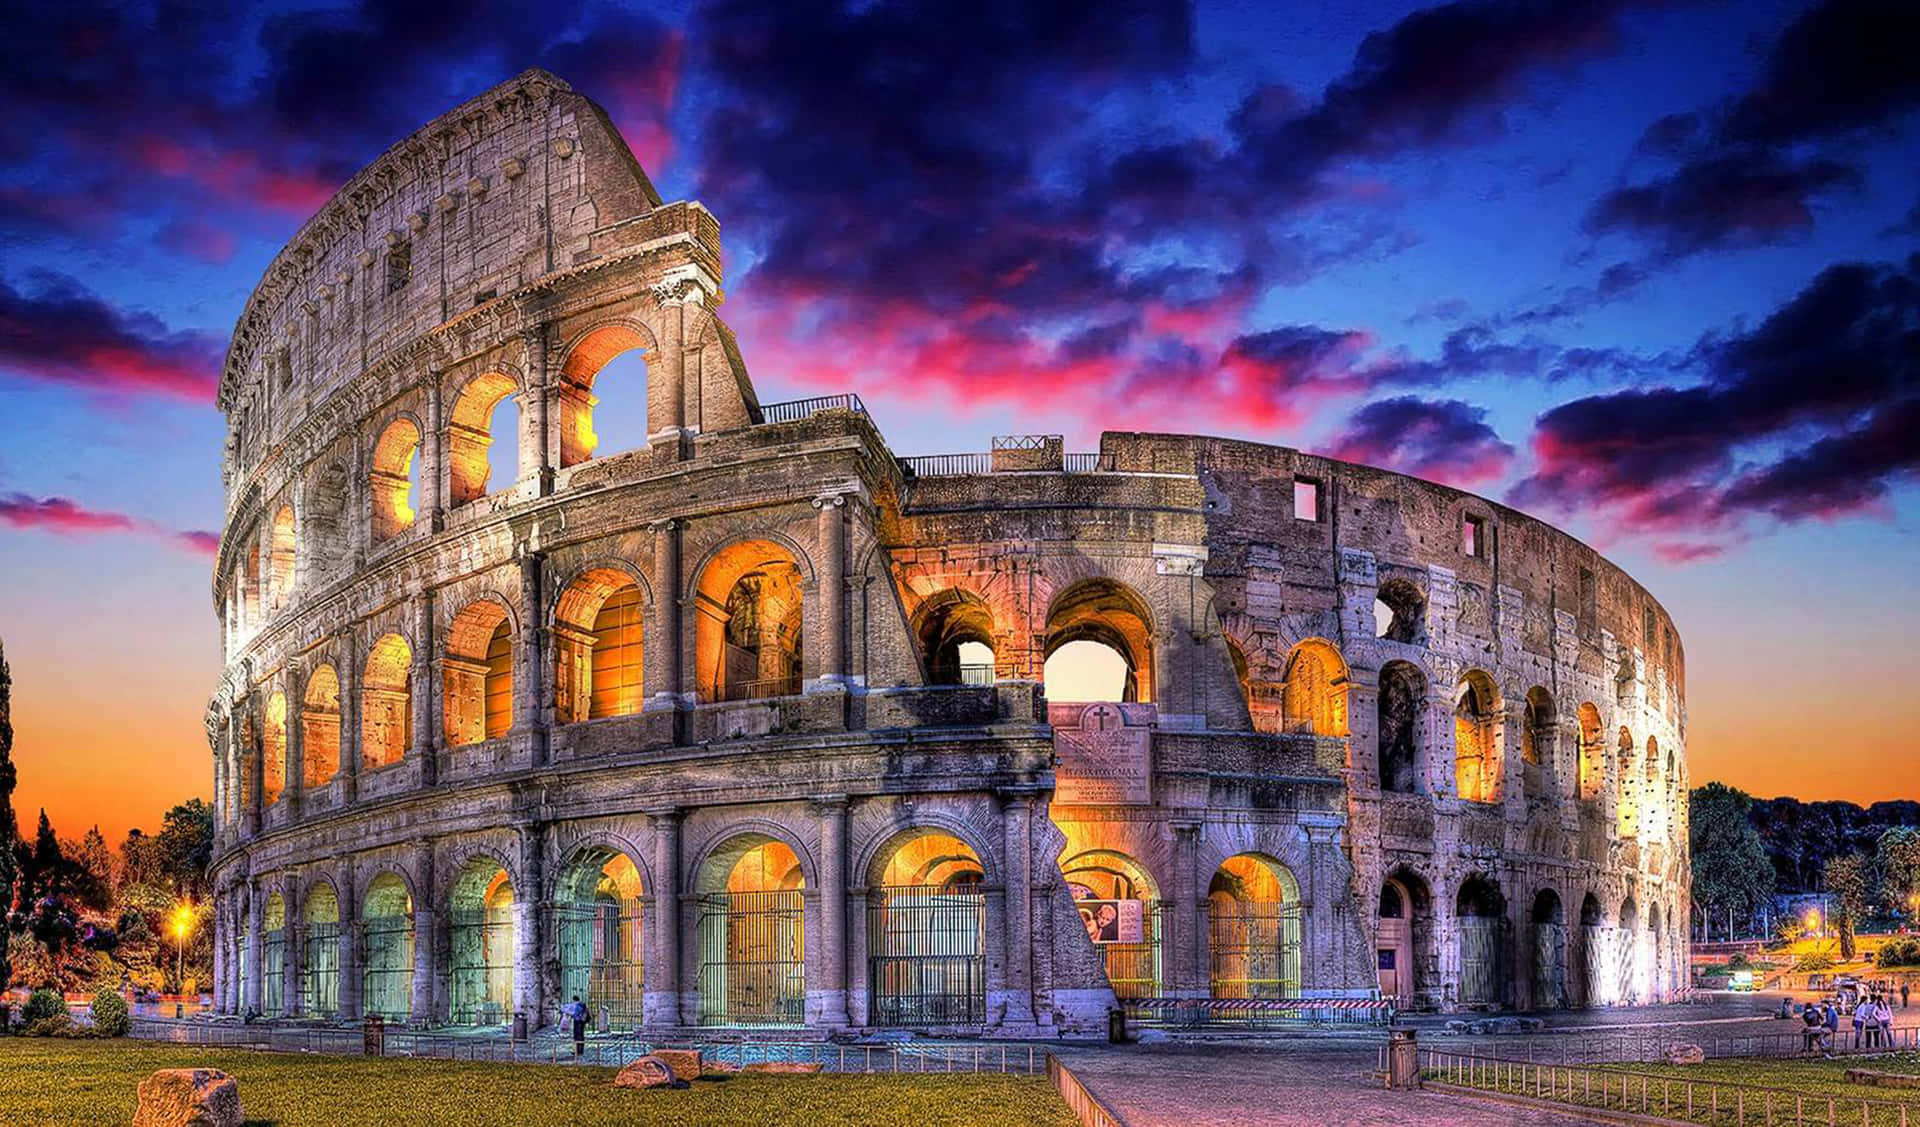 Admirea Arte E A Arquitetura Da Roma Antiga.